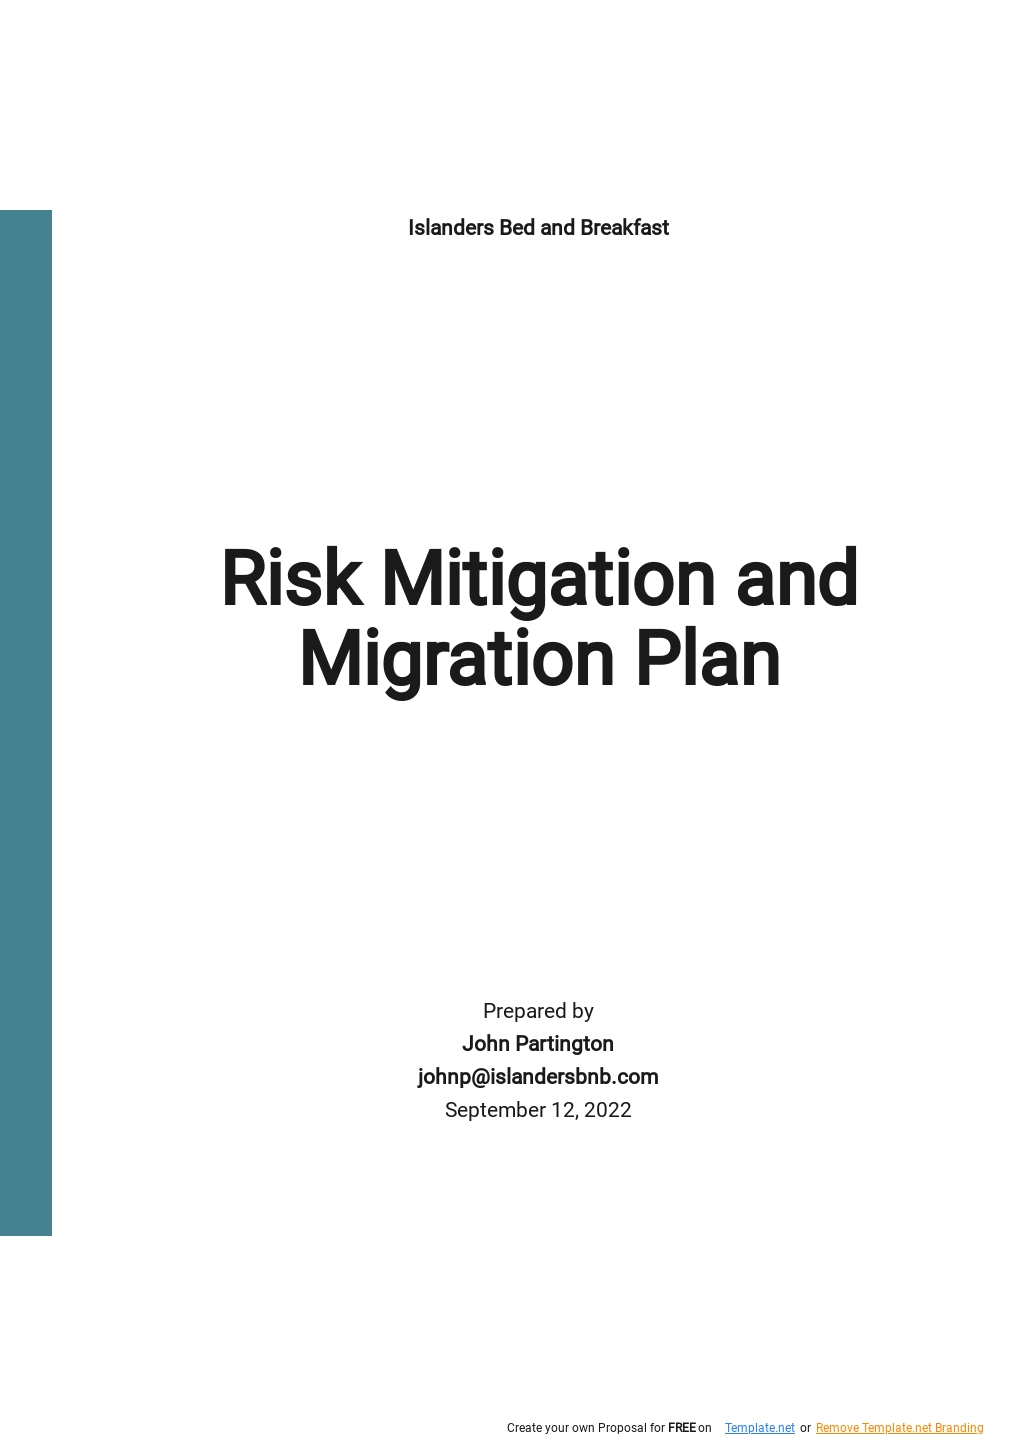 Risk Mitigation And Migration Plan Template.jpe